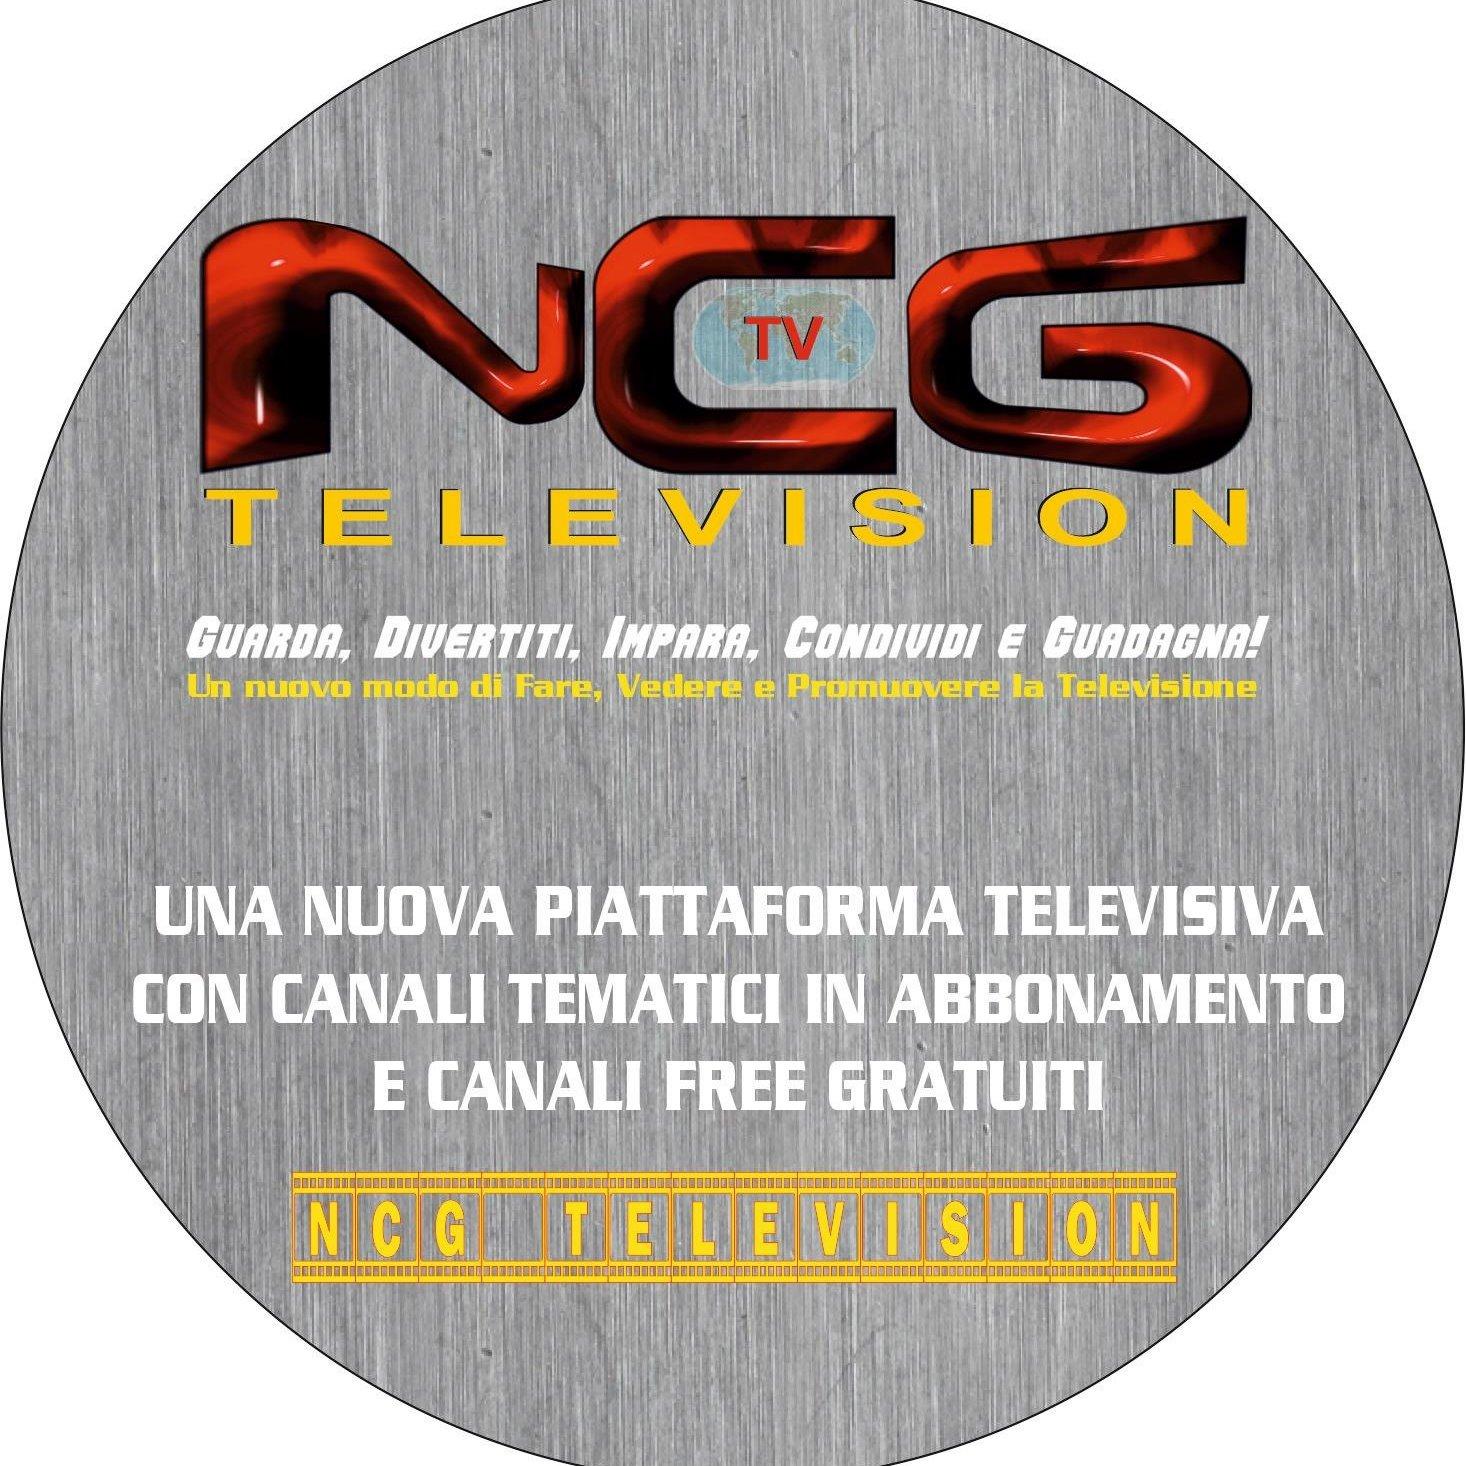 NCG TELEVISION